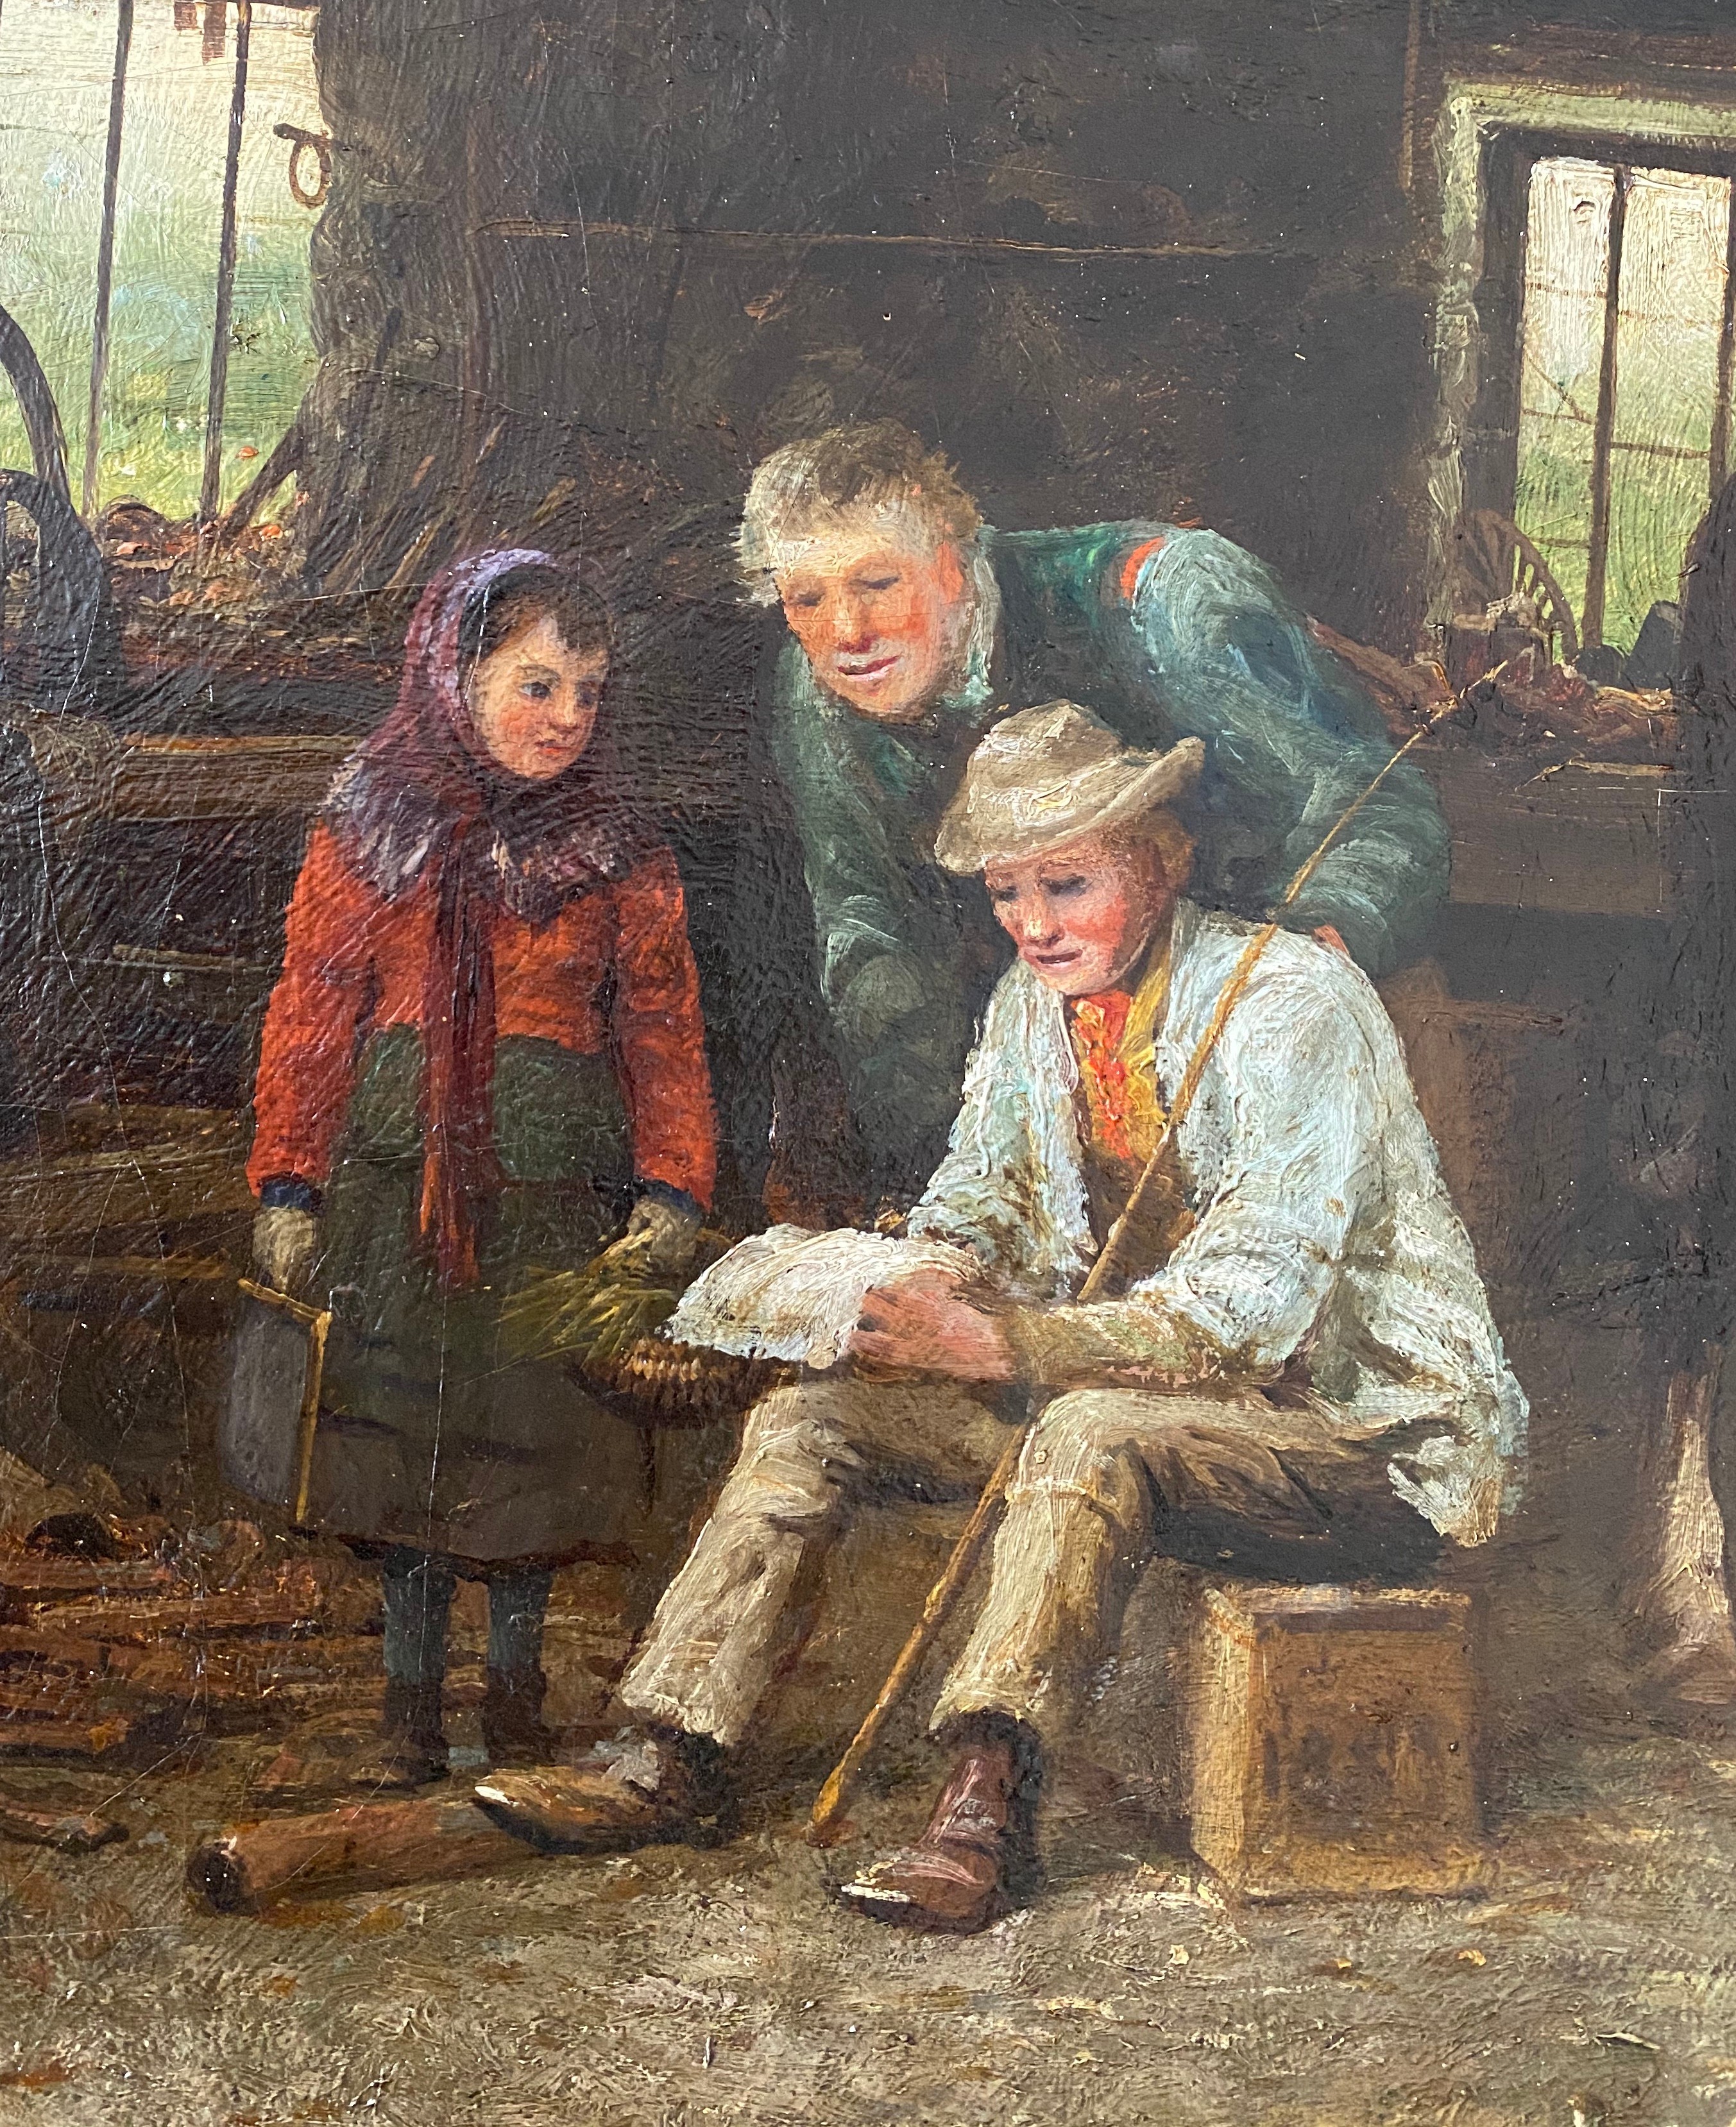 Joseph Wrightson McIntyre fl 1866-1888. British. Oil on canvas. “The Village Smithy”. - Image 2 of 6